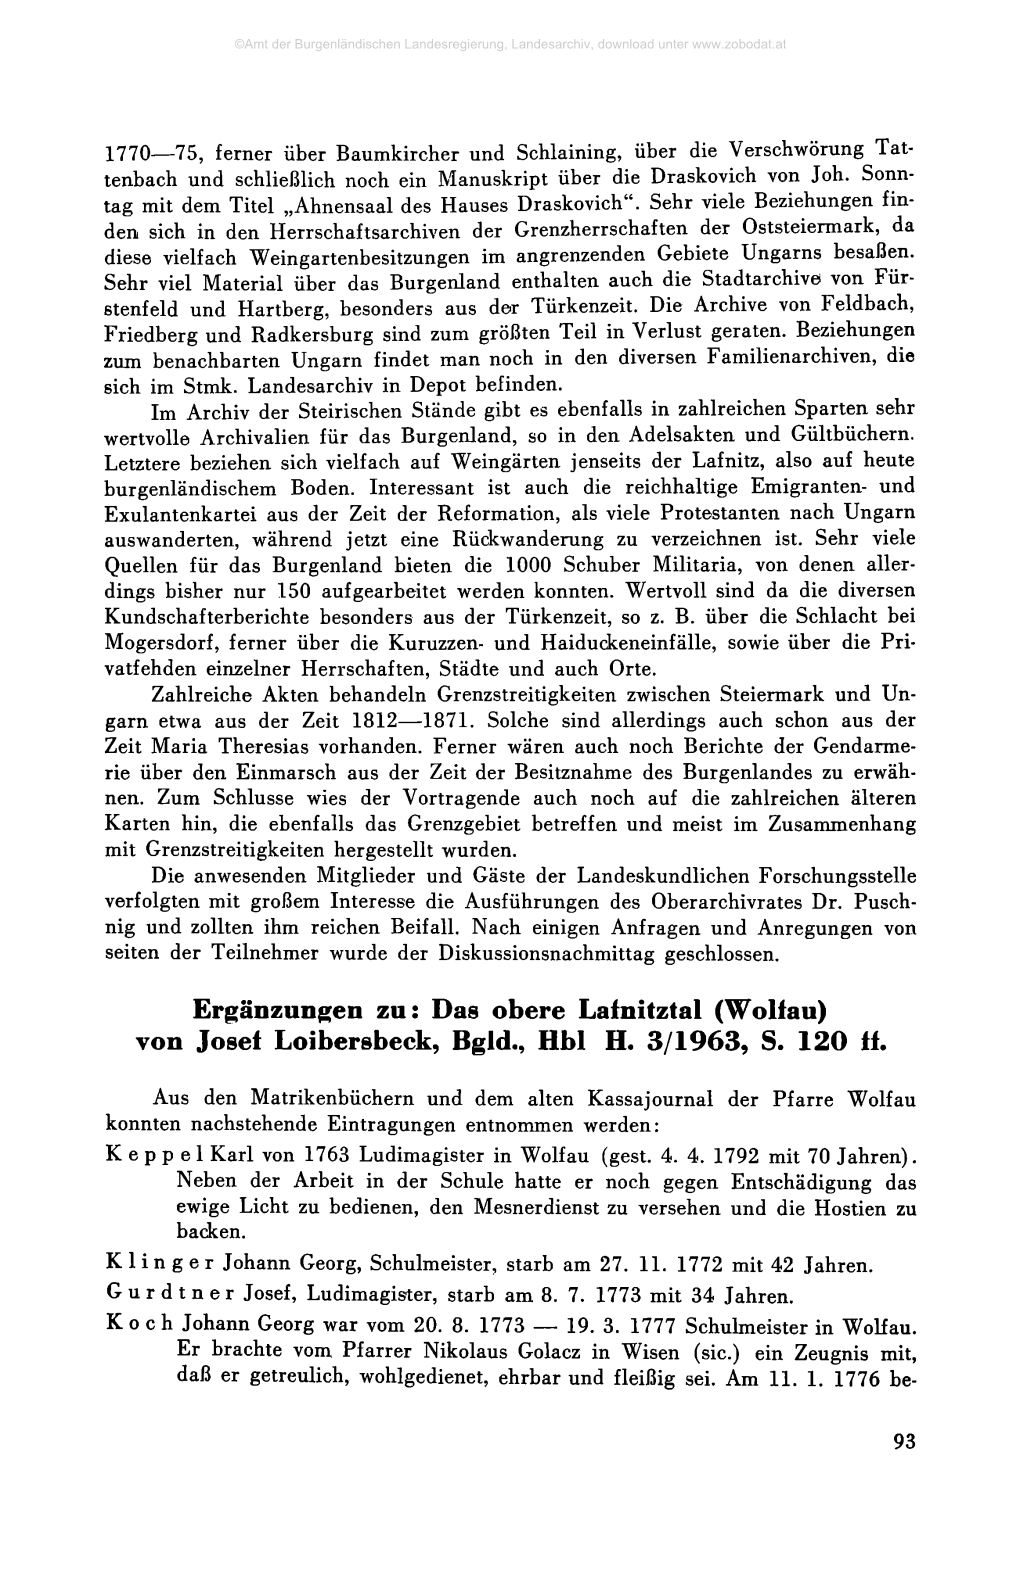 Wolfau) Von Josef Loibersbeck, Bgld., Hbl H